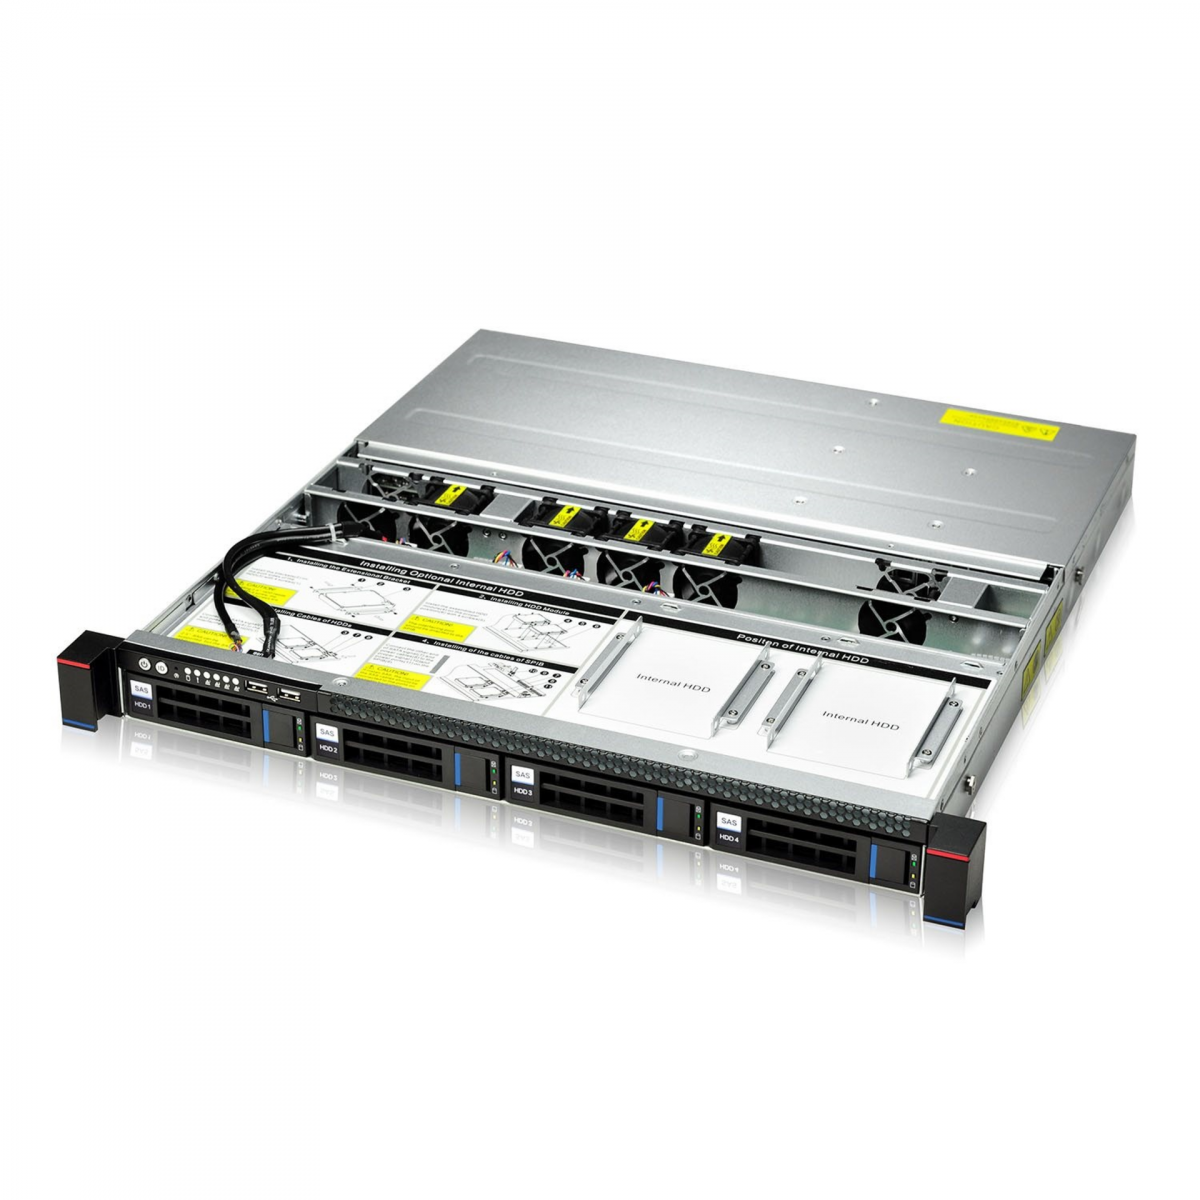 Серверная платформа SNR-SR1104R, 1U, E3-1200v6, DDR4, 4xHDD, резервируемый БП